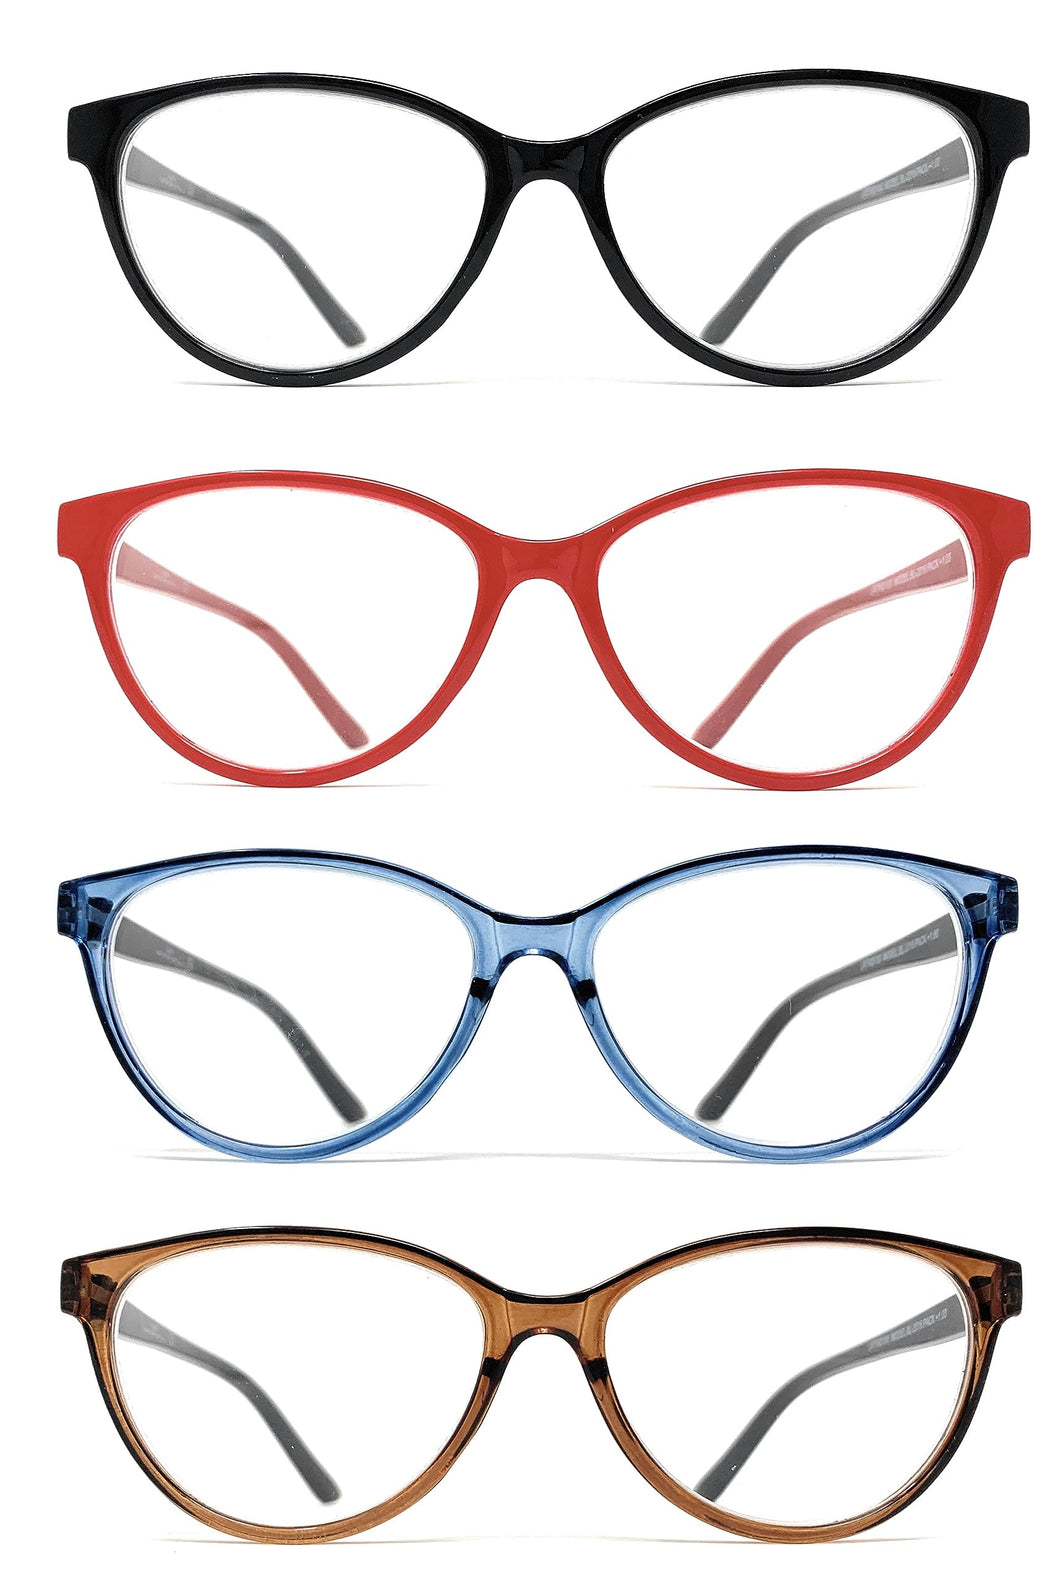 Pack 4 gafas de presbicia marca Vannali modelo Naomi - Siempre tendrás un par a mano, estés donde estés.